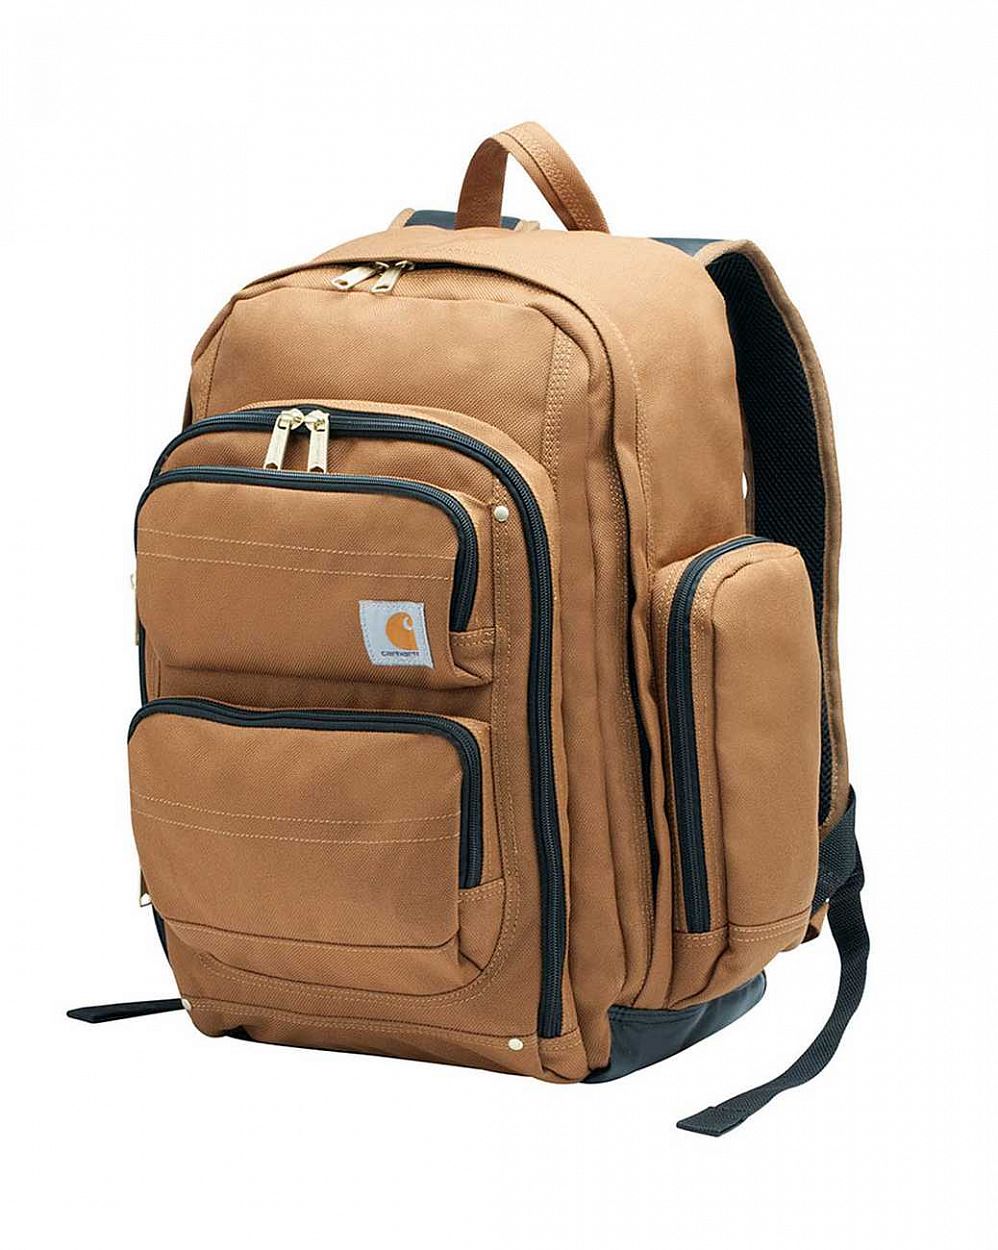 Рюкзак Carhartt USA Deluxe Daypack Backpack Brown отзывы